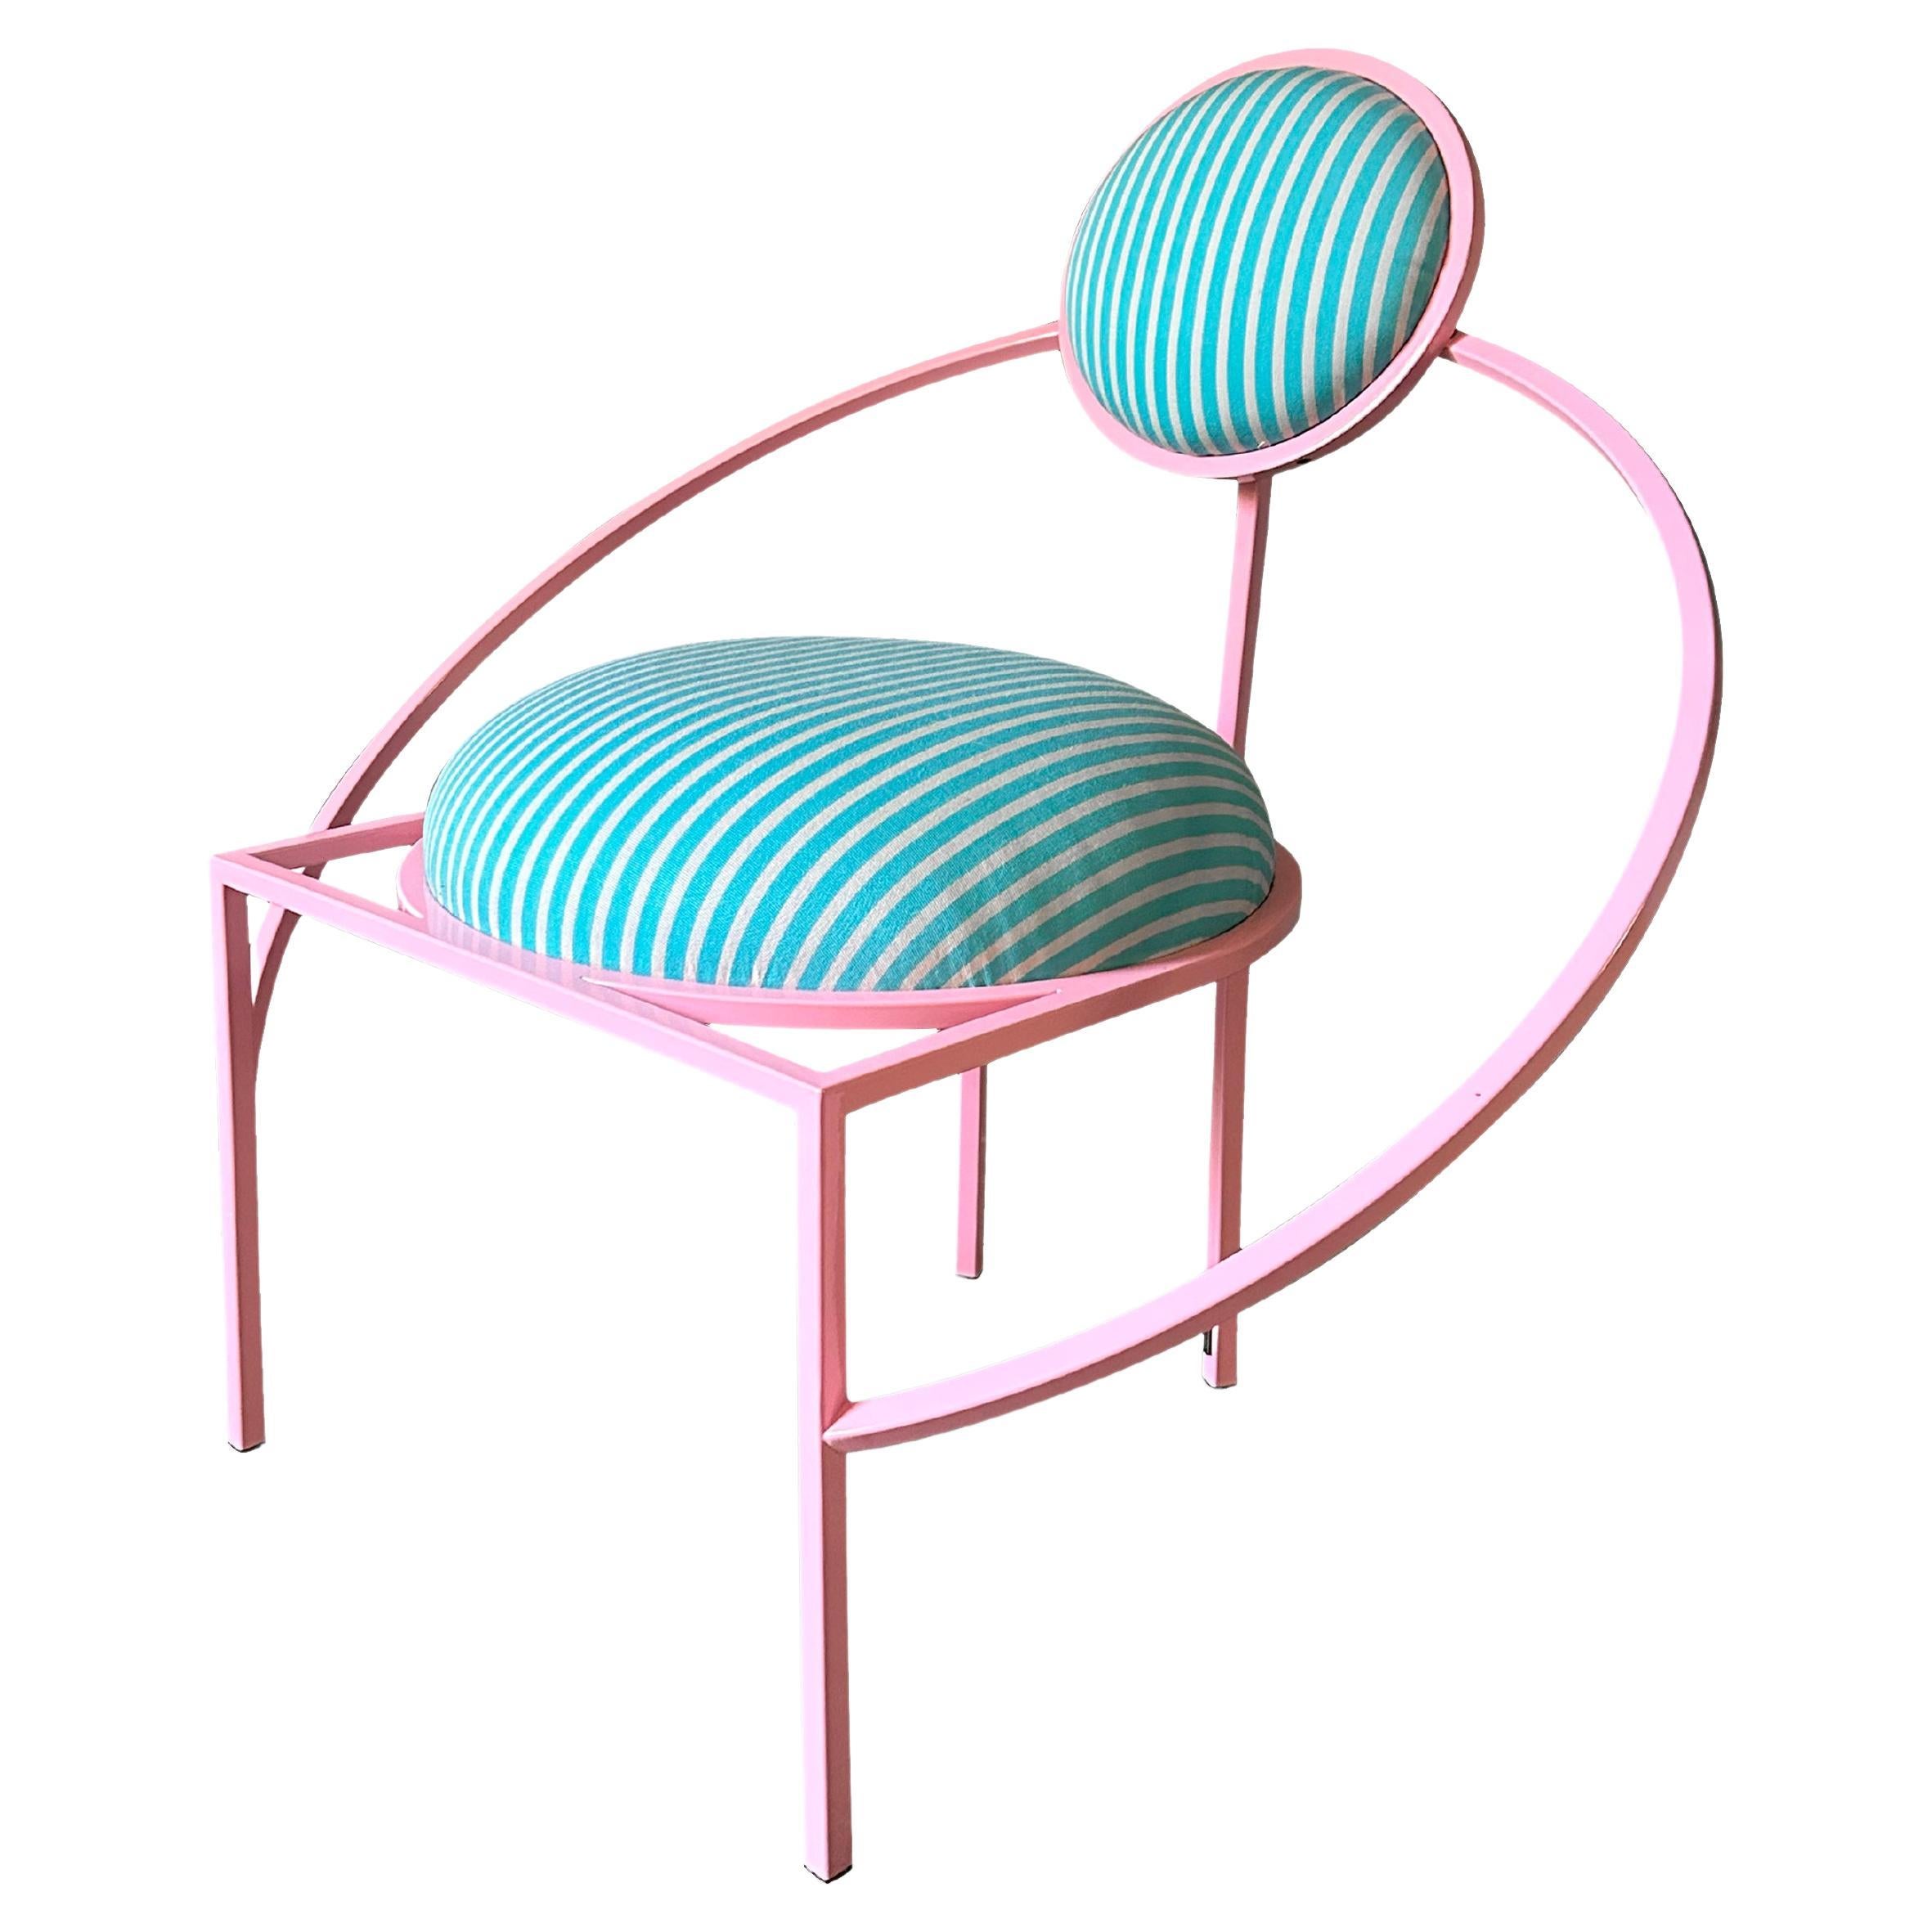 Orbit Garden Chair, Outdoor , Pink  Steel and Stripe Fabric by Lara Bohinc